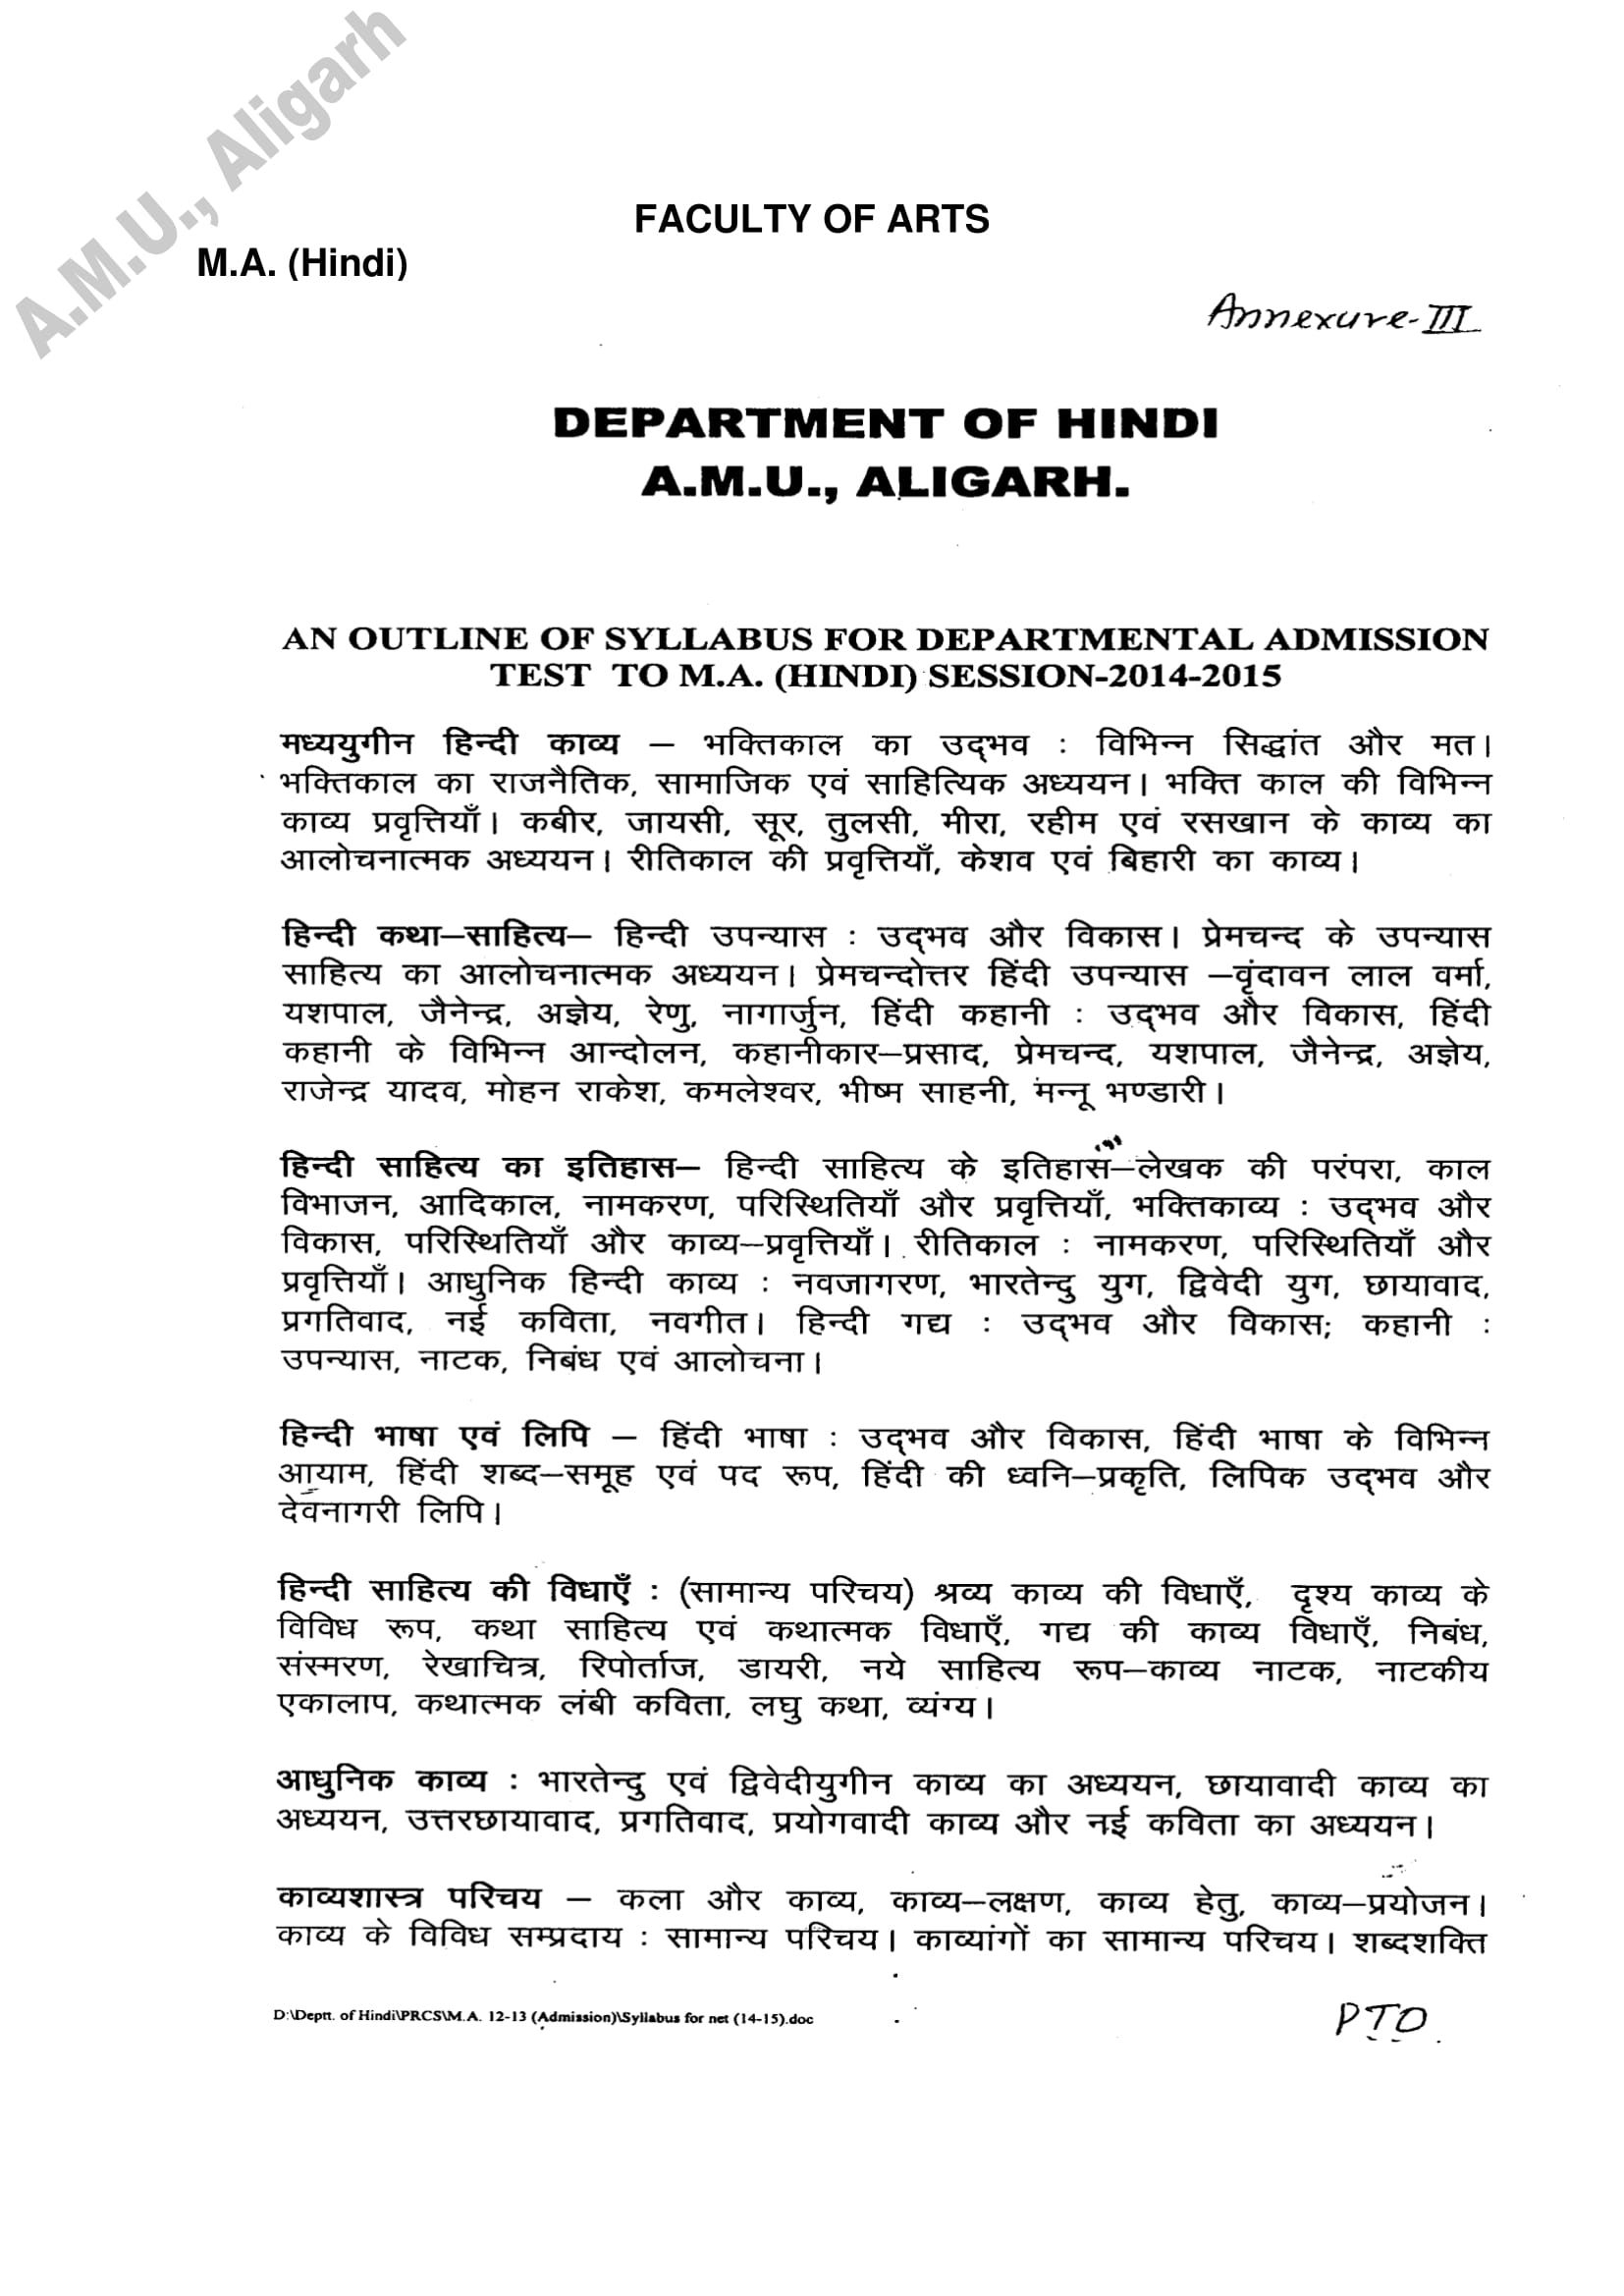 AMU Entrance Exam Syllabus for M.A. in Hindi - Page 1